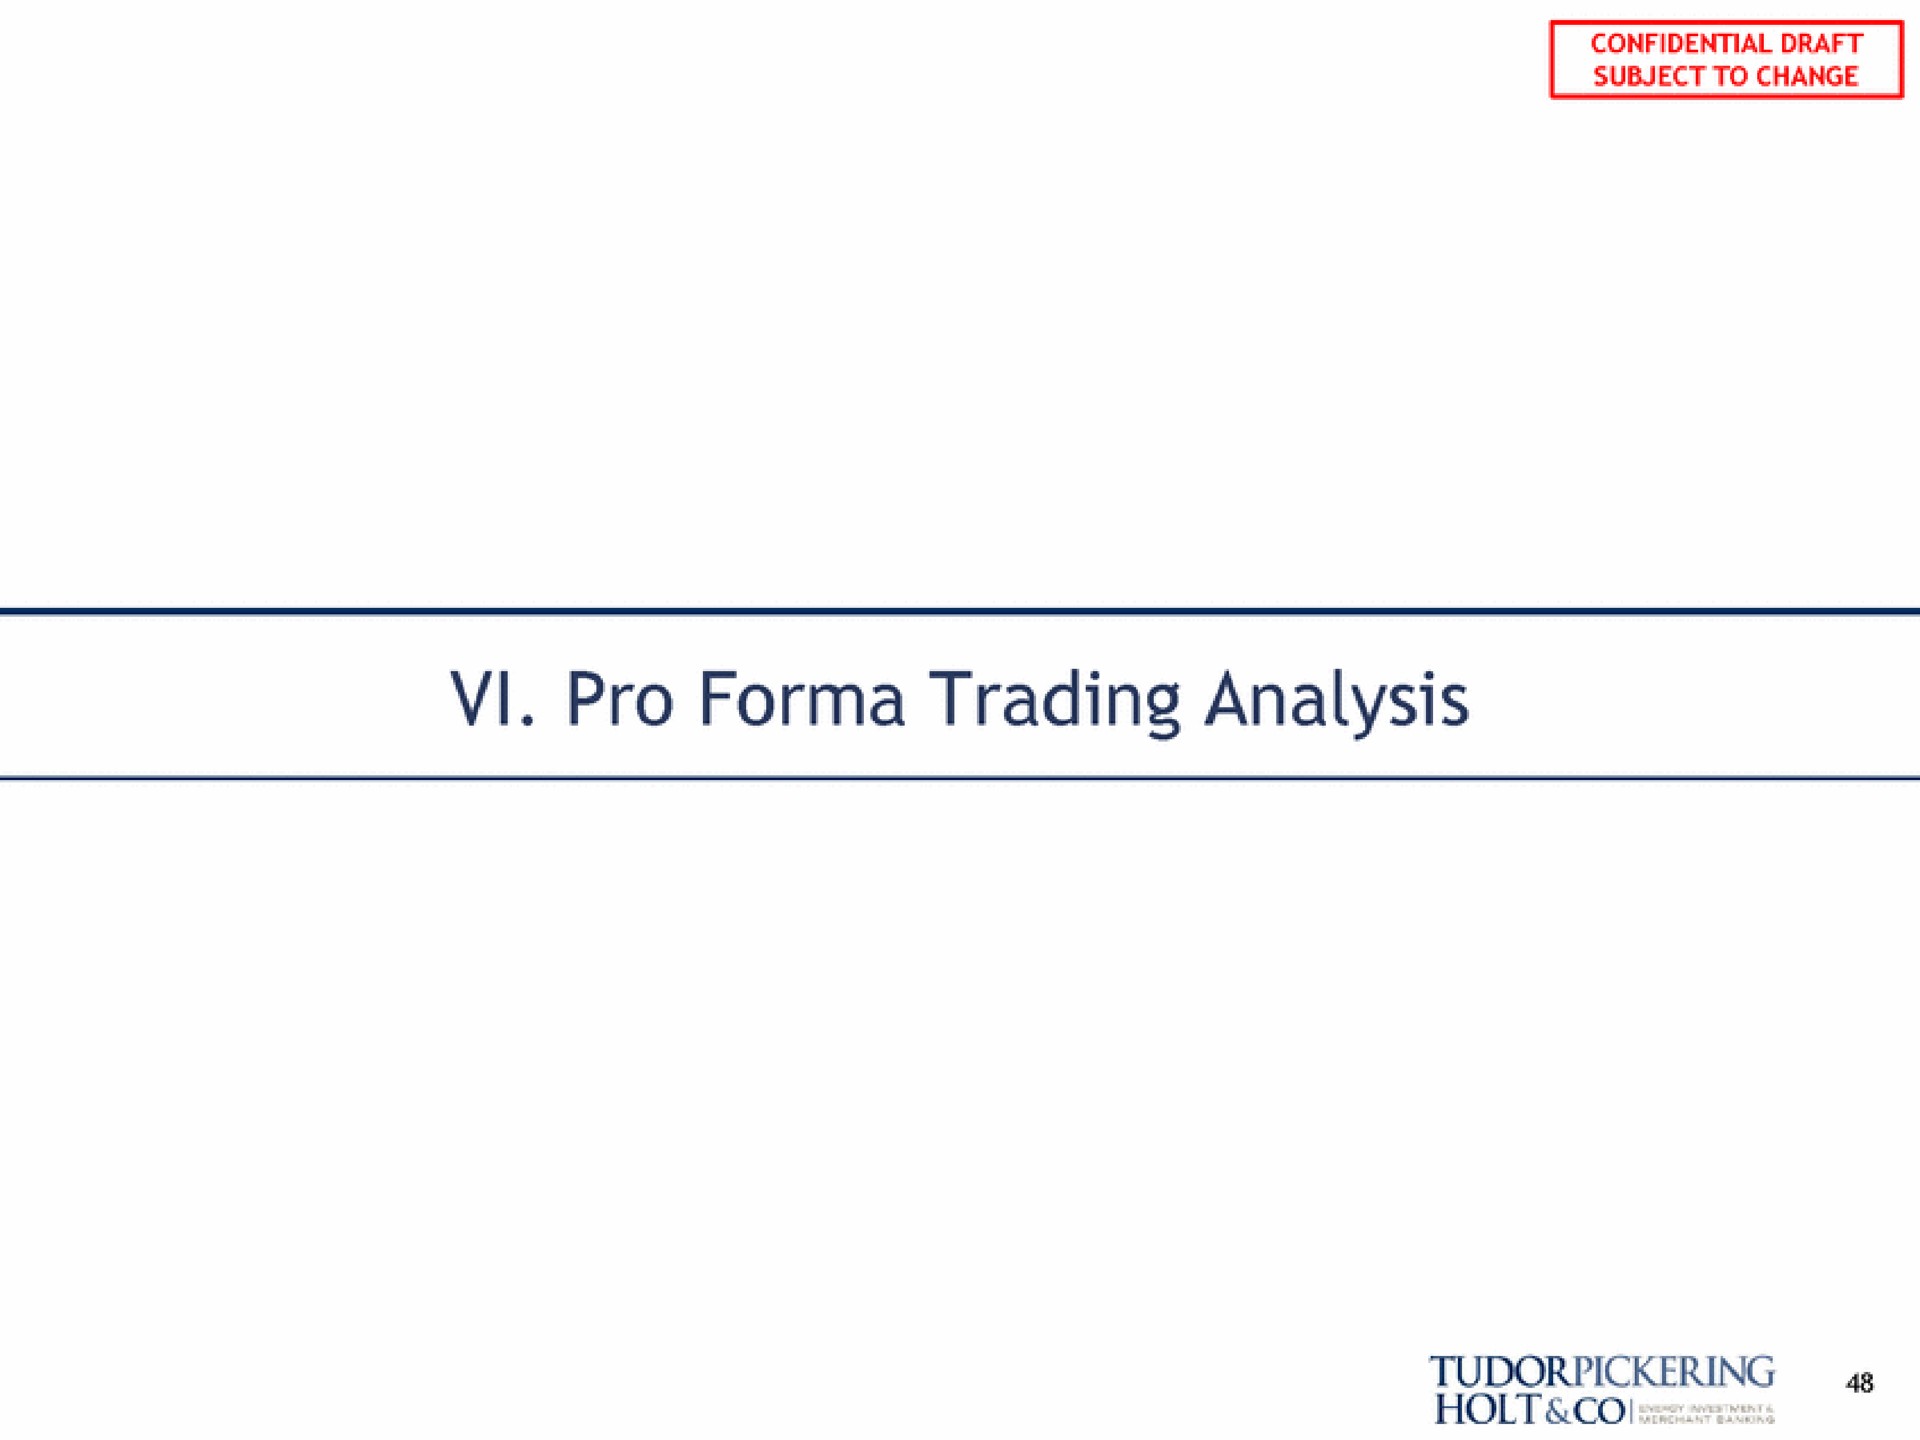 pro trading analysis | Tudor, Pickering, Holt & Co